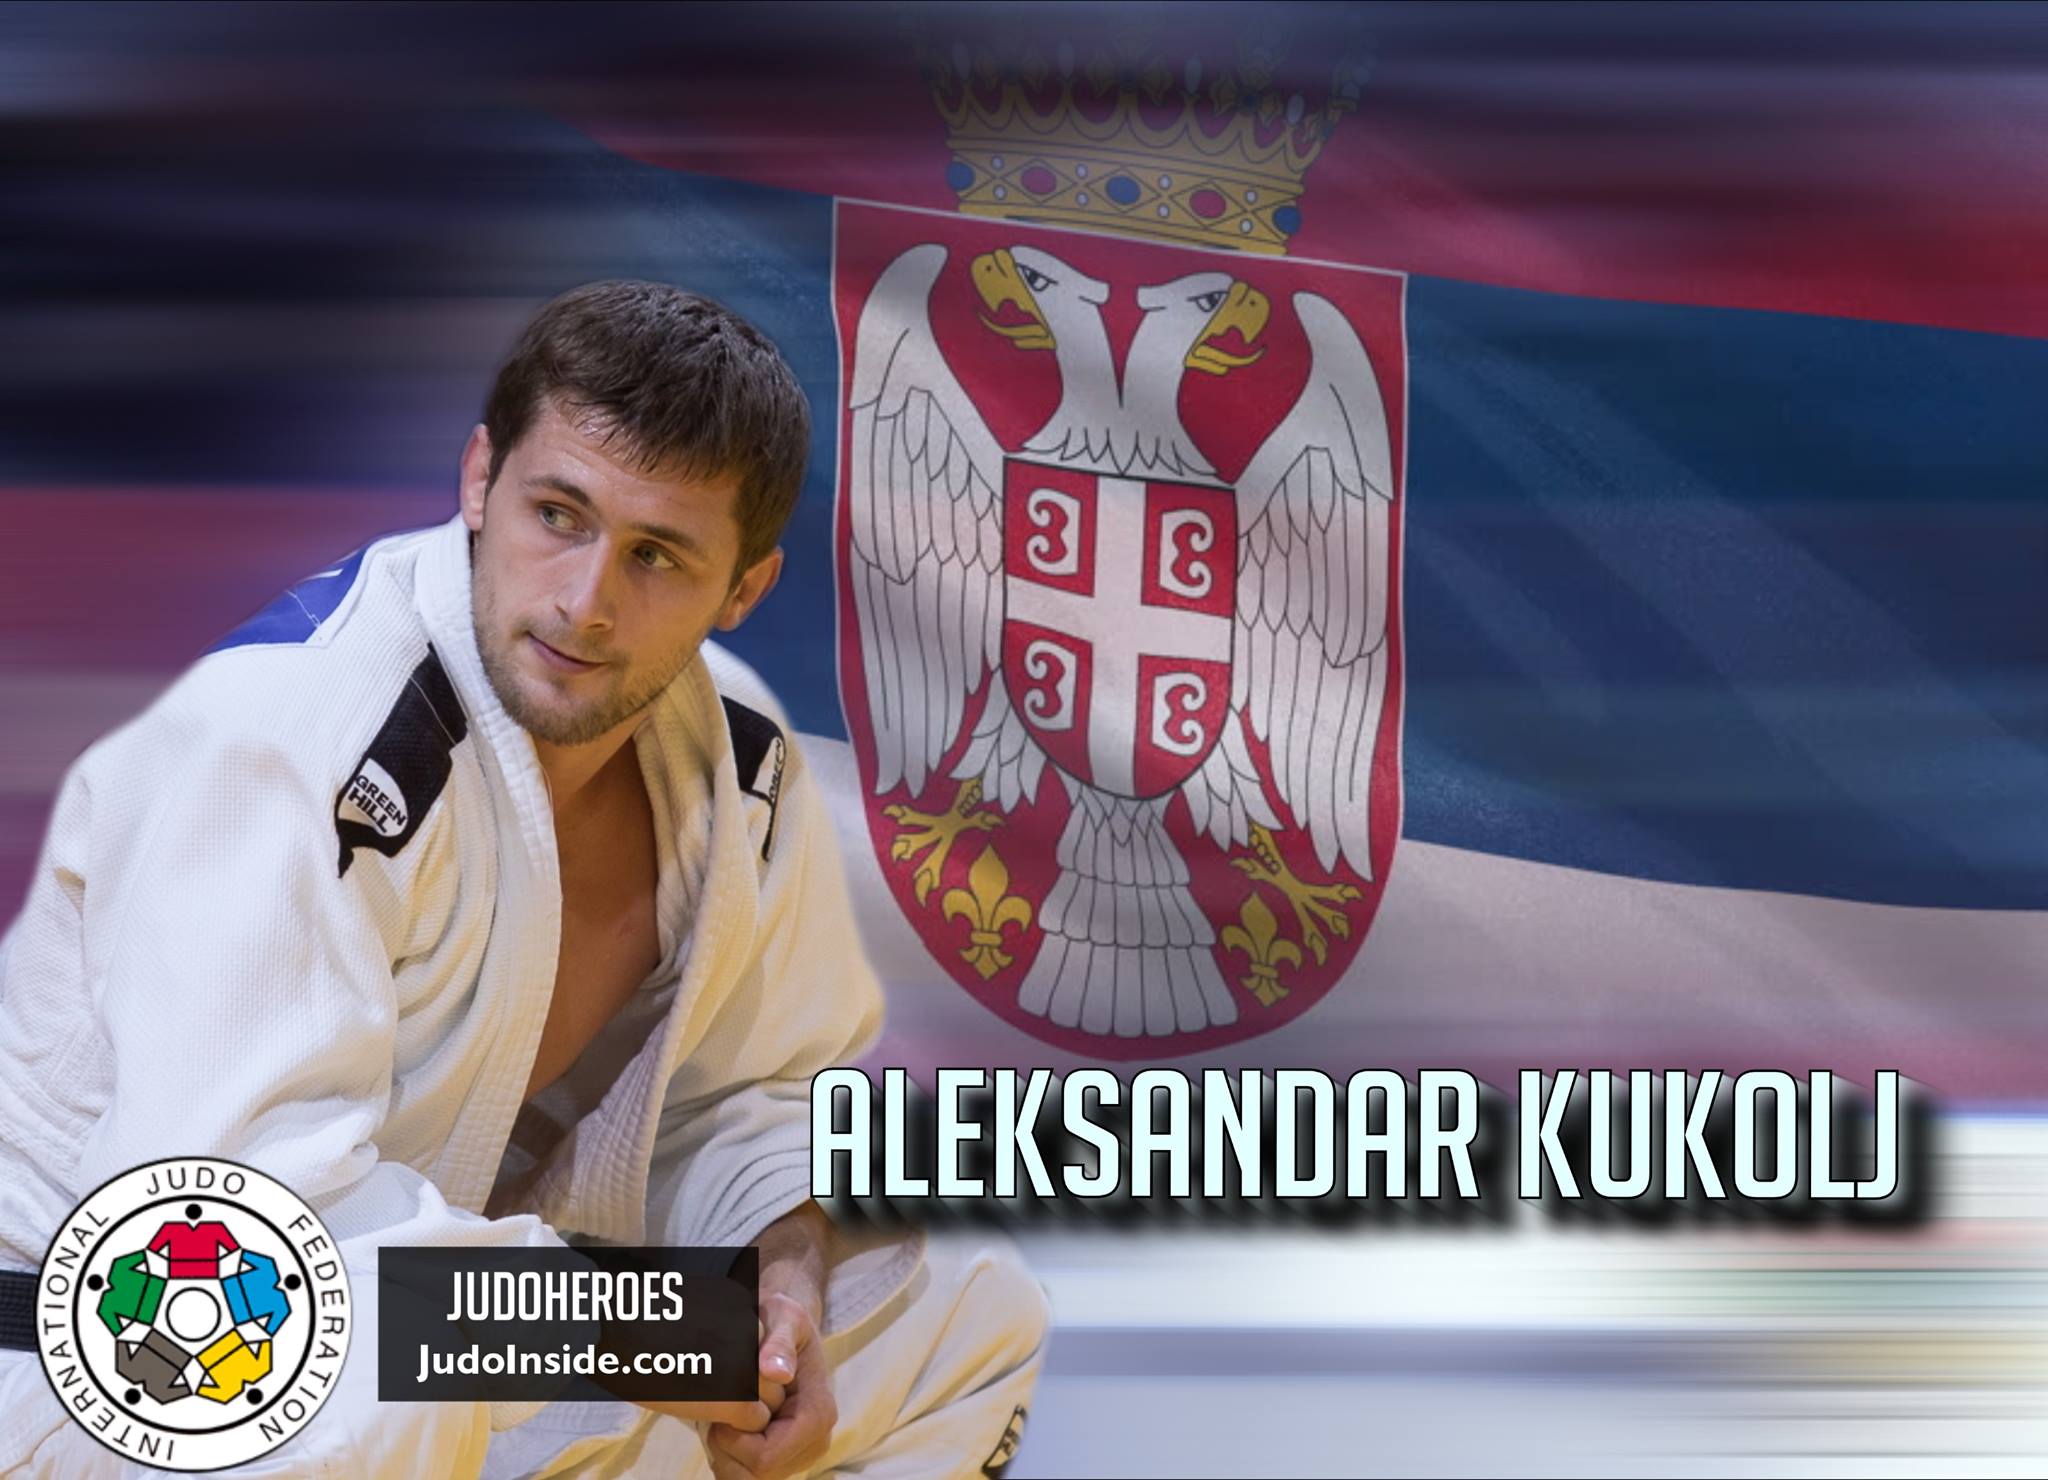 Aleksandar Kukolj